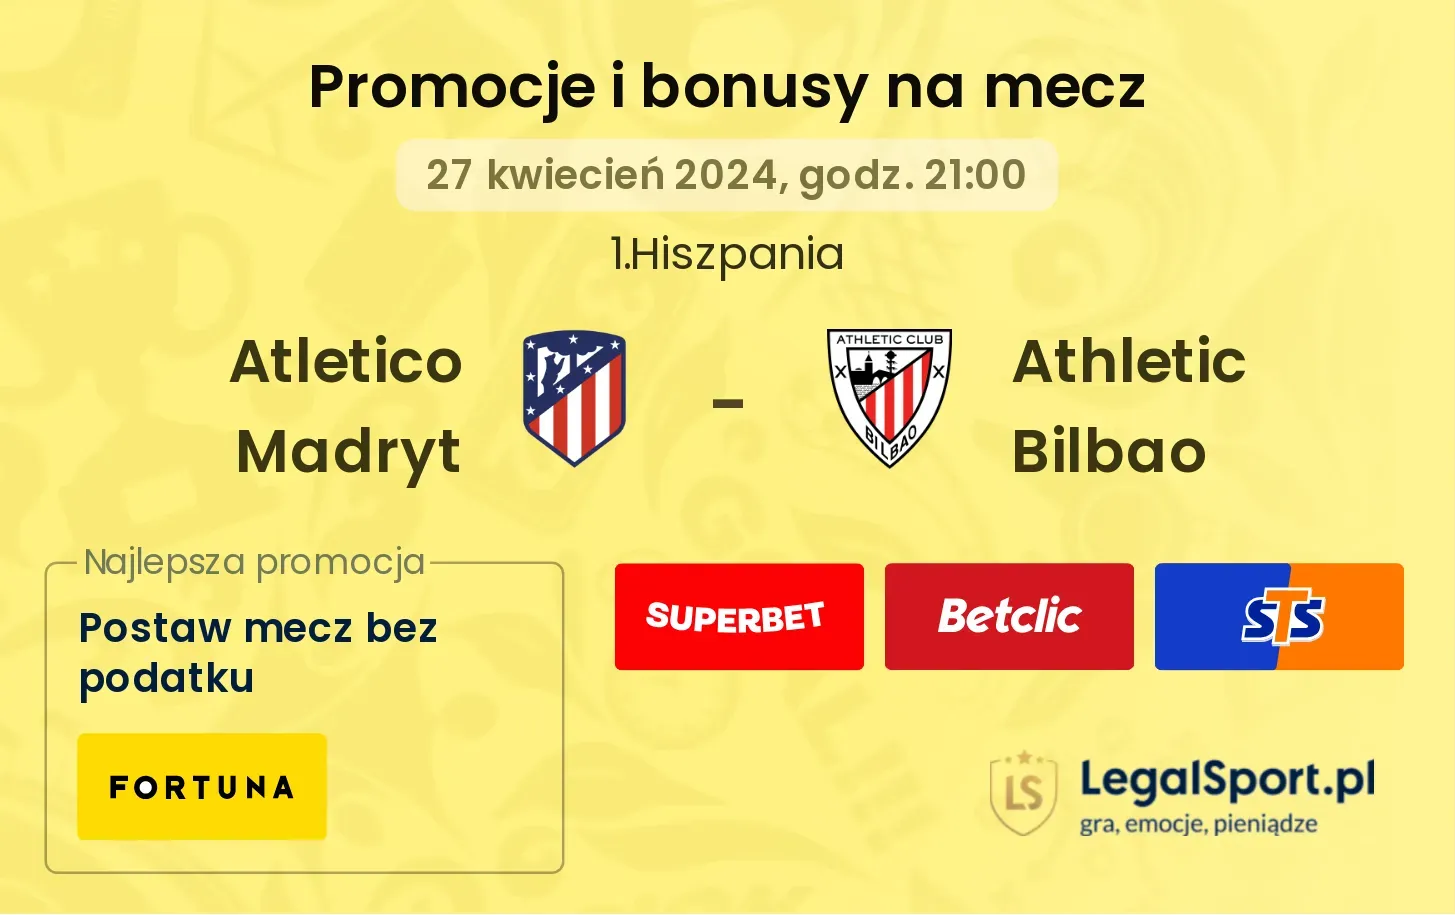 Atletico Madryt - Athletic Bilbao bonusy i promocje (27.04, 21:00)